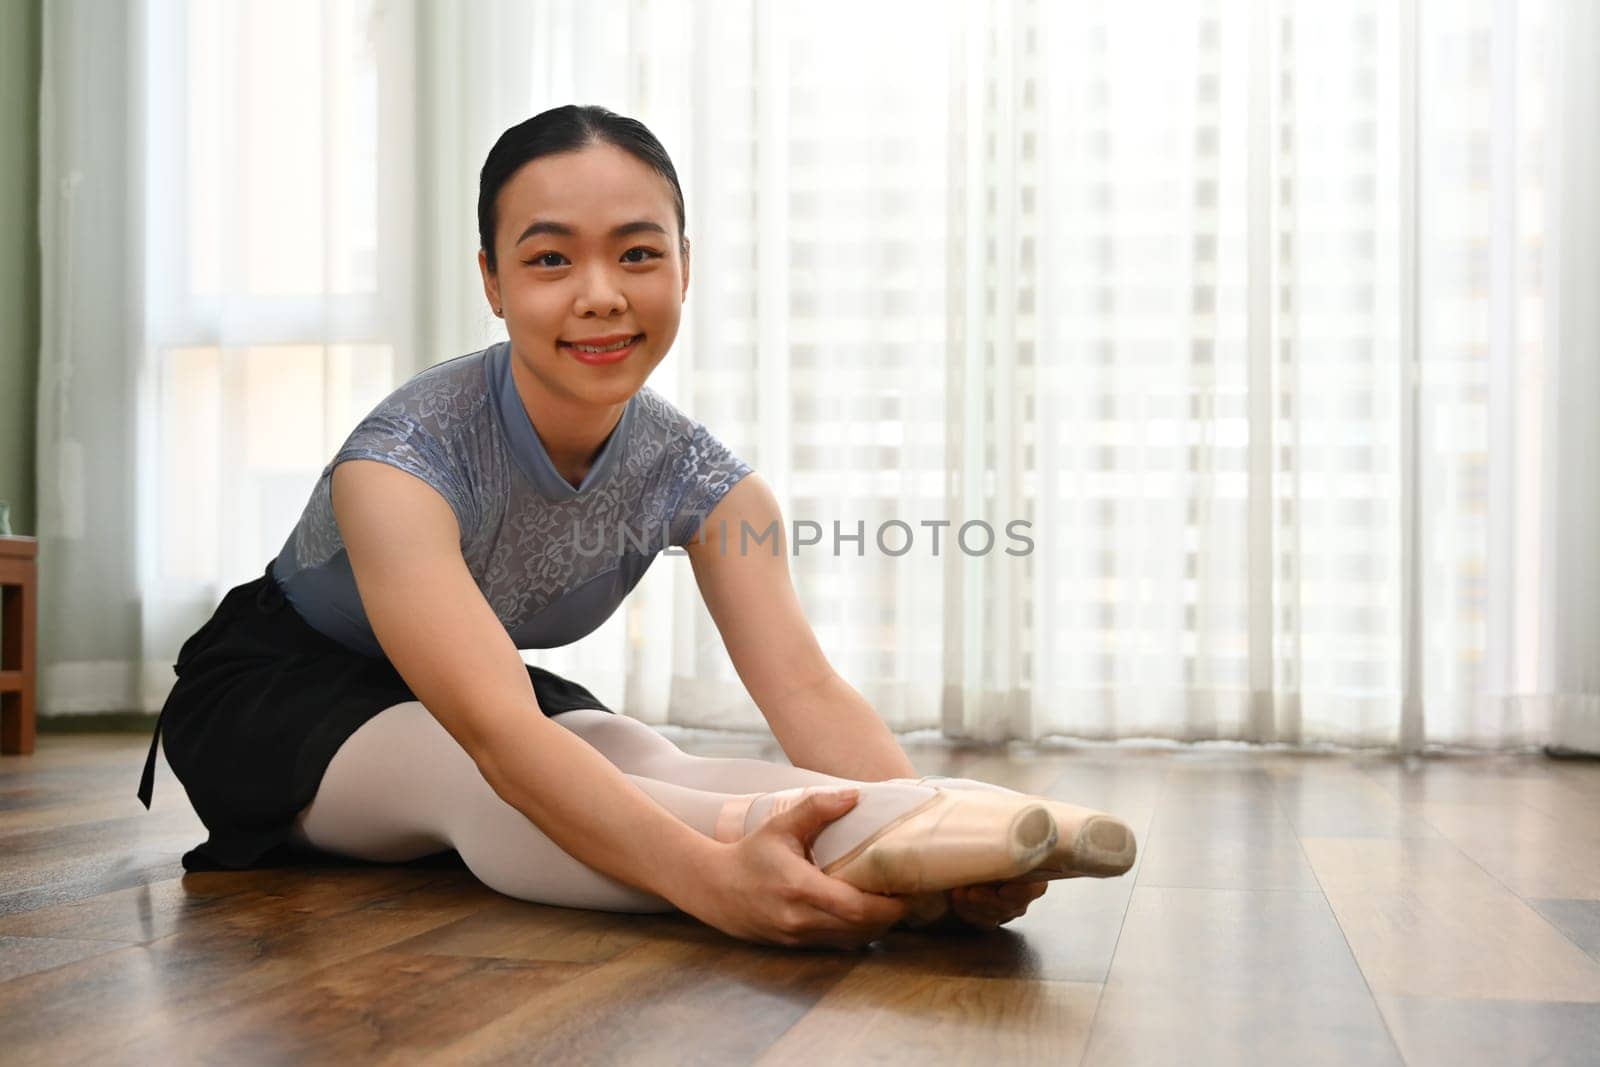 Beautiful ballerina sitting on the floor, warming up before dance class. Dance, art and flexibility concept by prathanchorruangsak